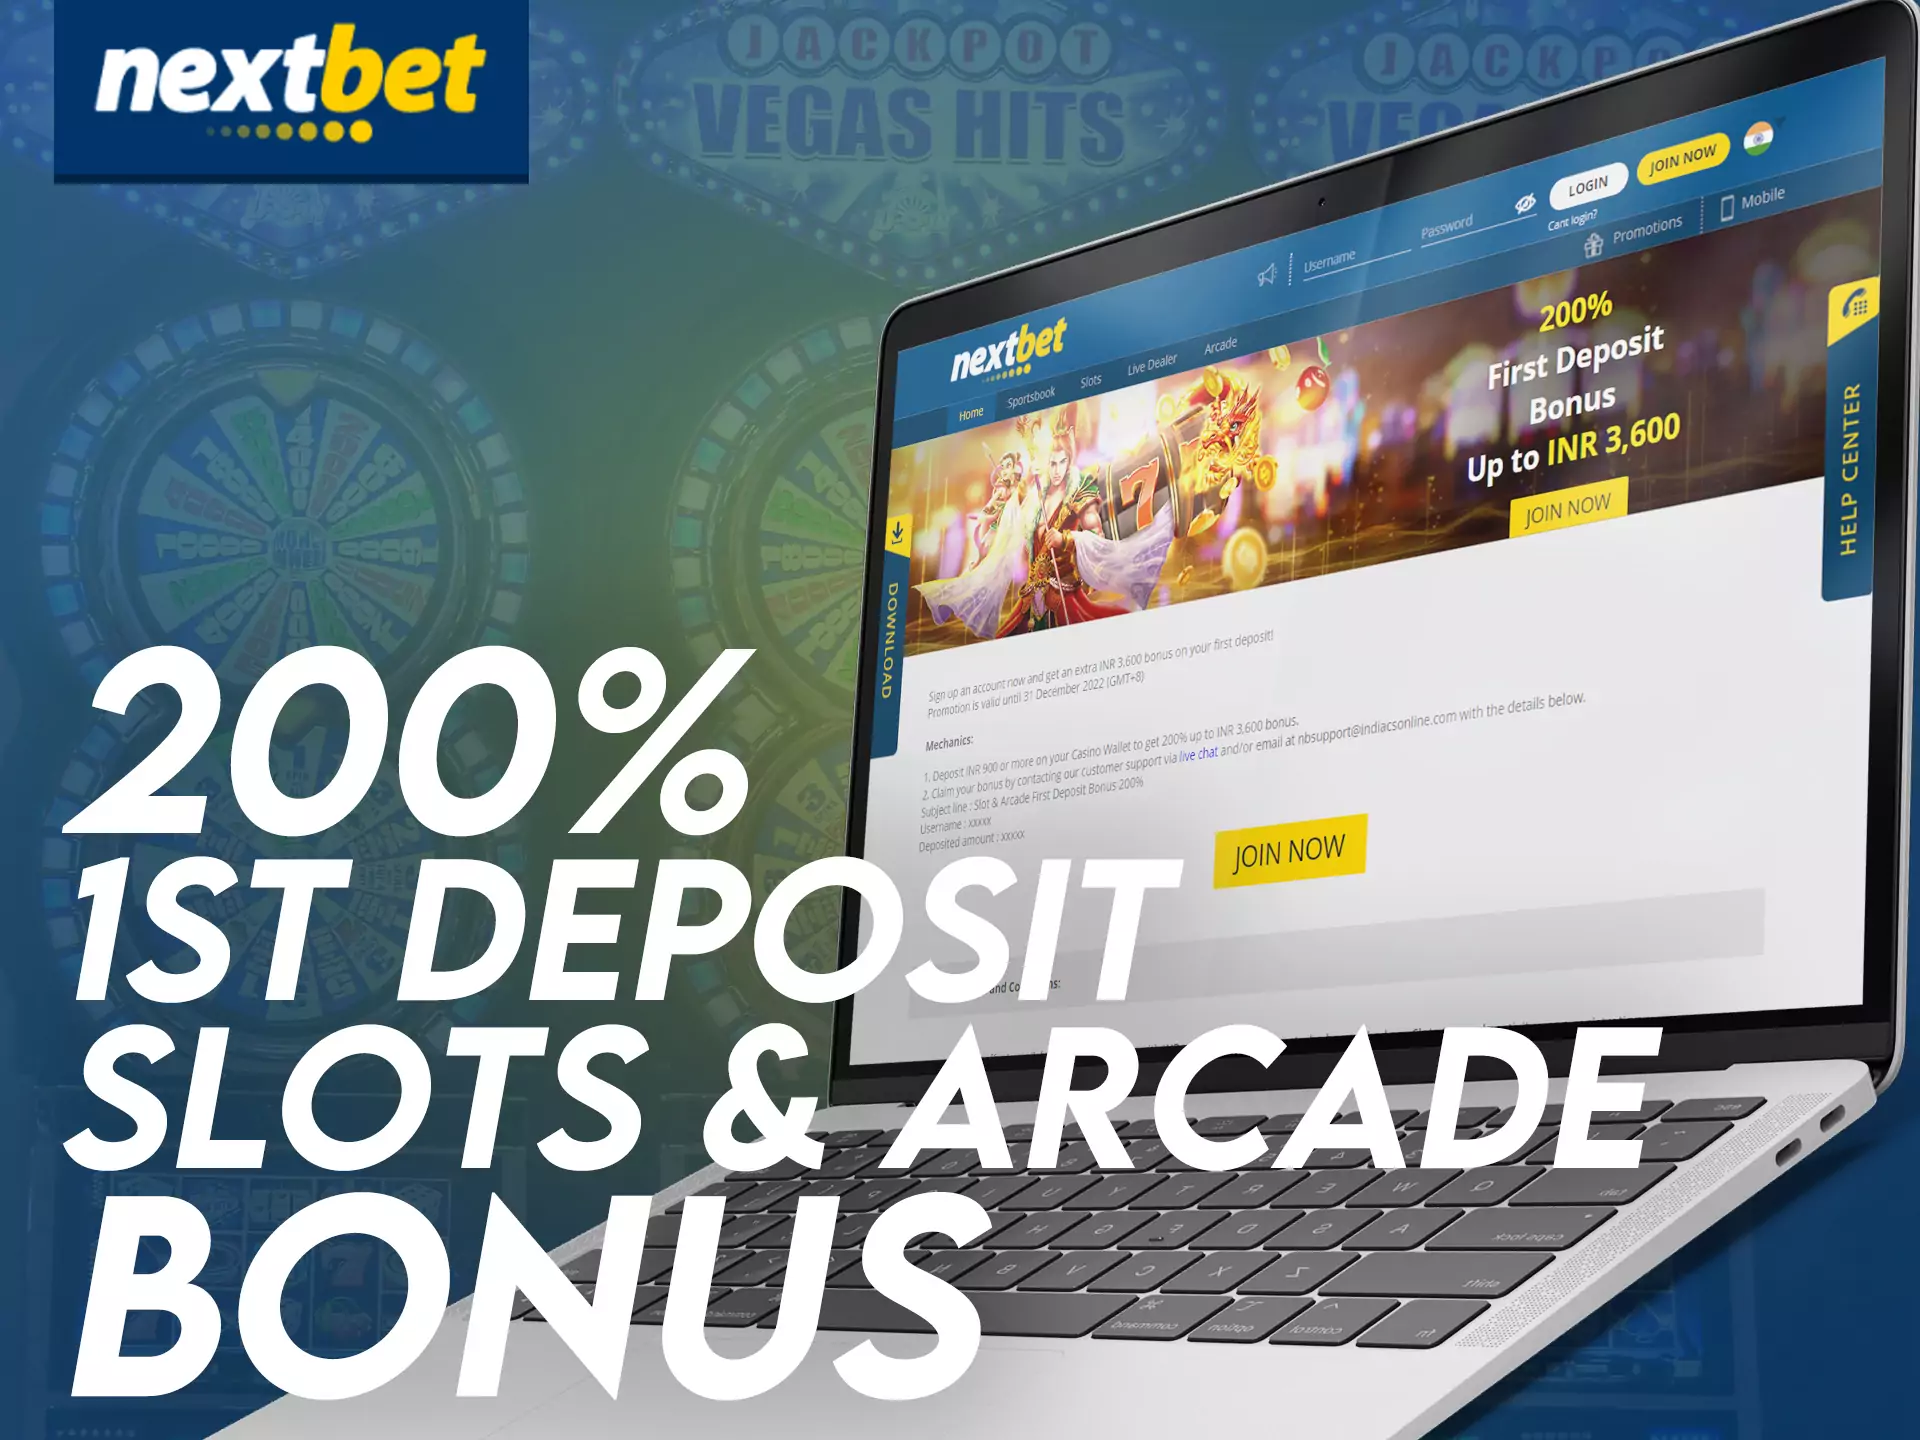 Nextbet has a special profitable first deposit bonus on slots and arcades.